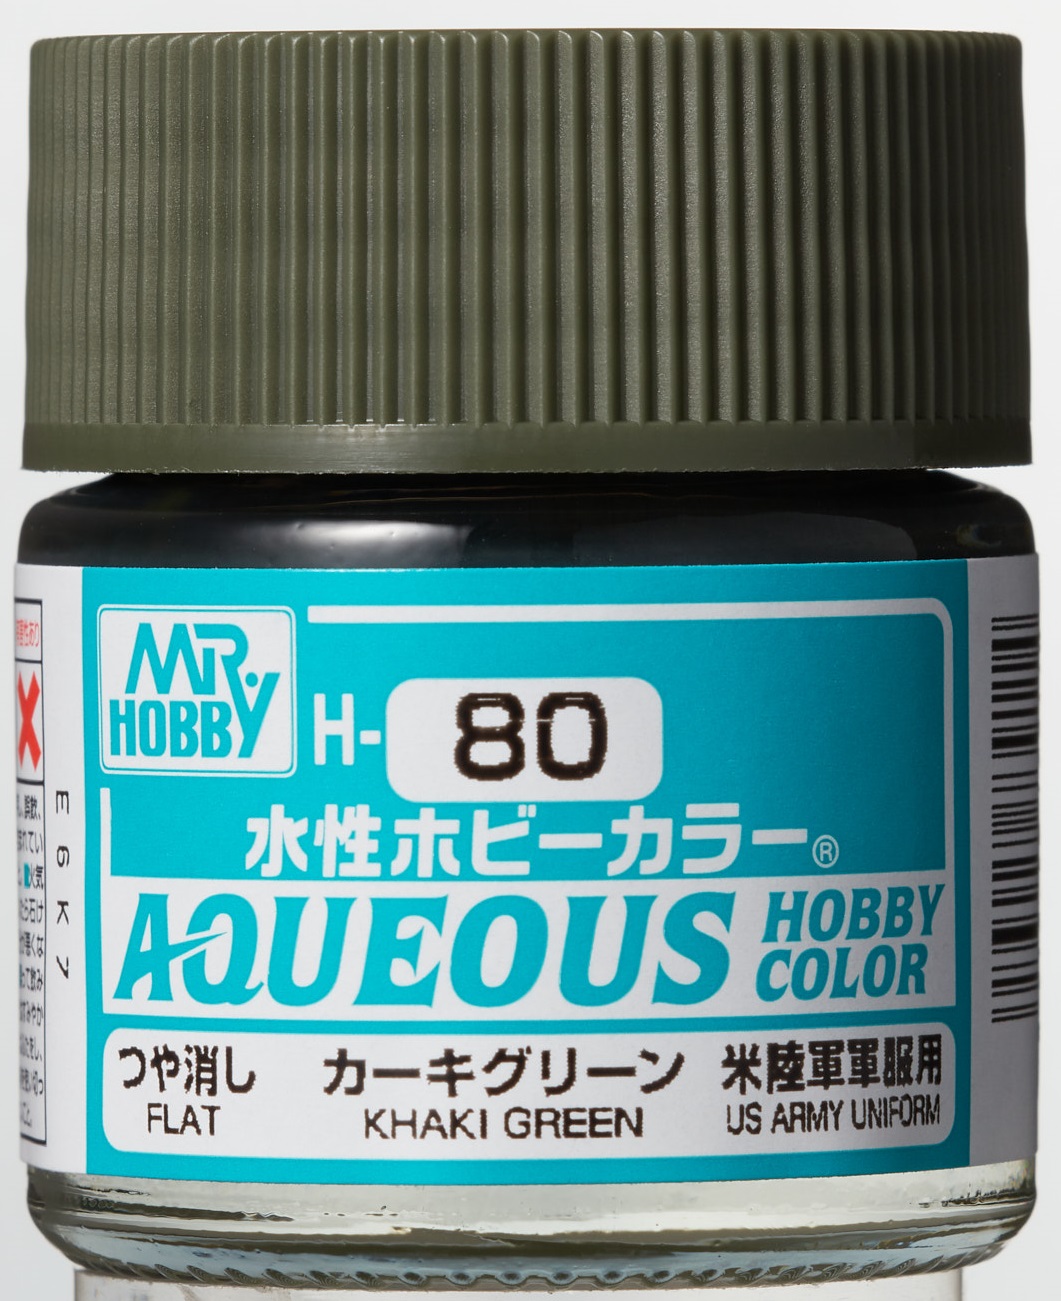 Mr. Aqueous Hobby Color - Khaki Green  - H80 - Khaki Grün